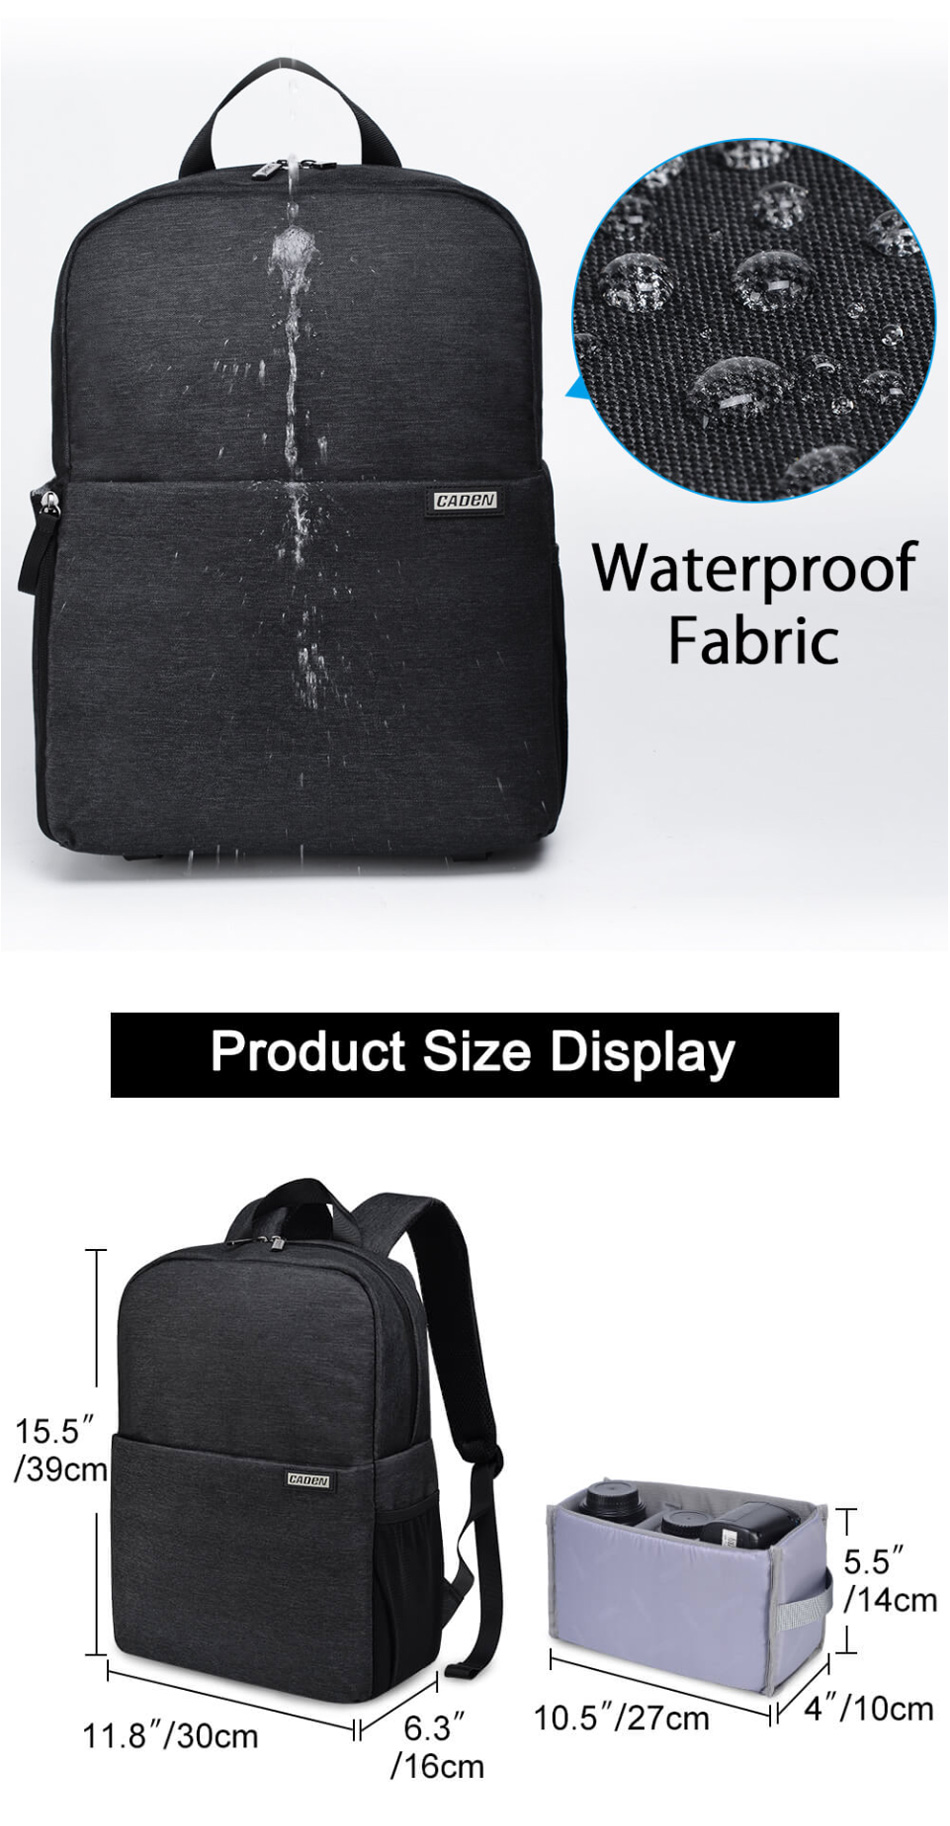 Caden-L4-Waterproof-Backpack-with-Padded-Bag-for-DSLR-Camera-Lens-Tripod-Laptop-1504015-3